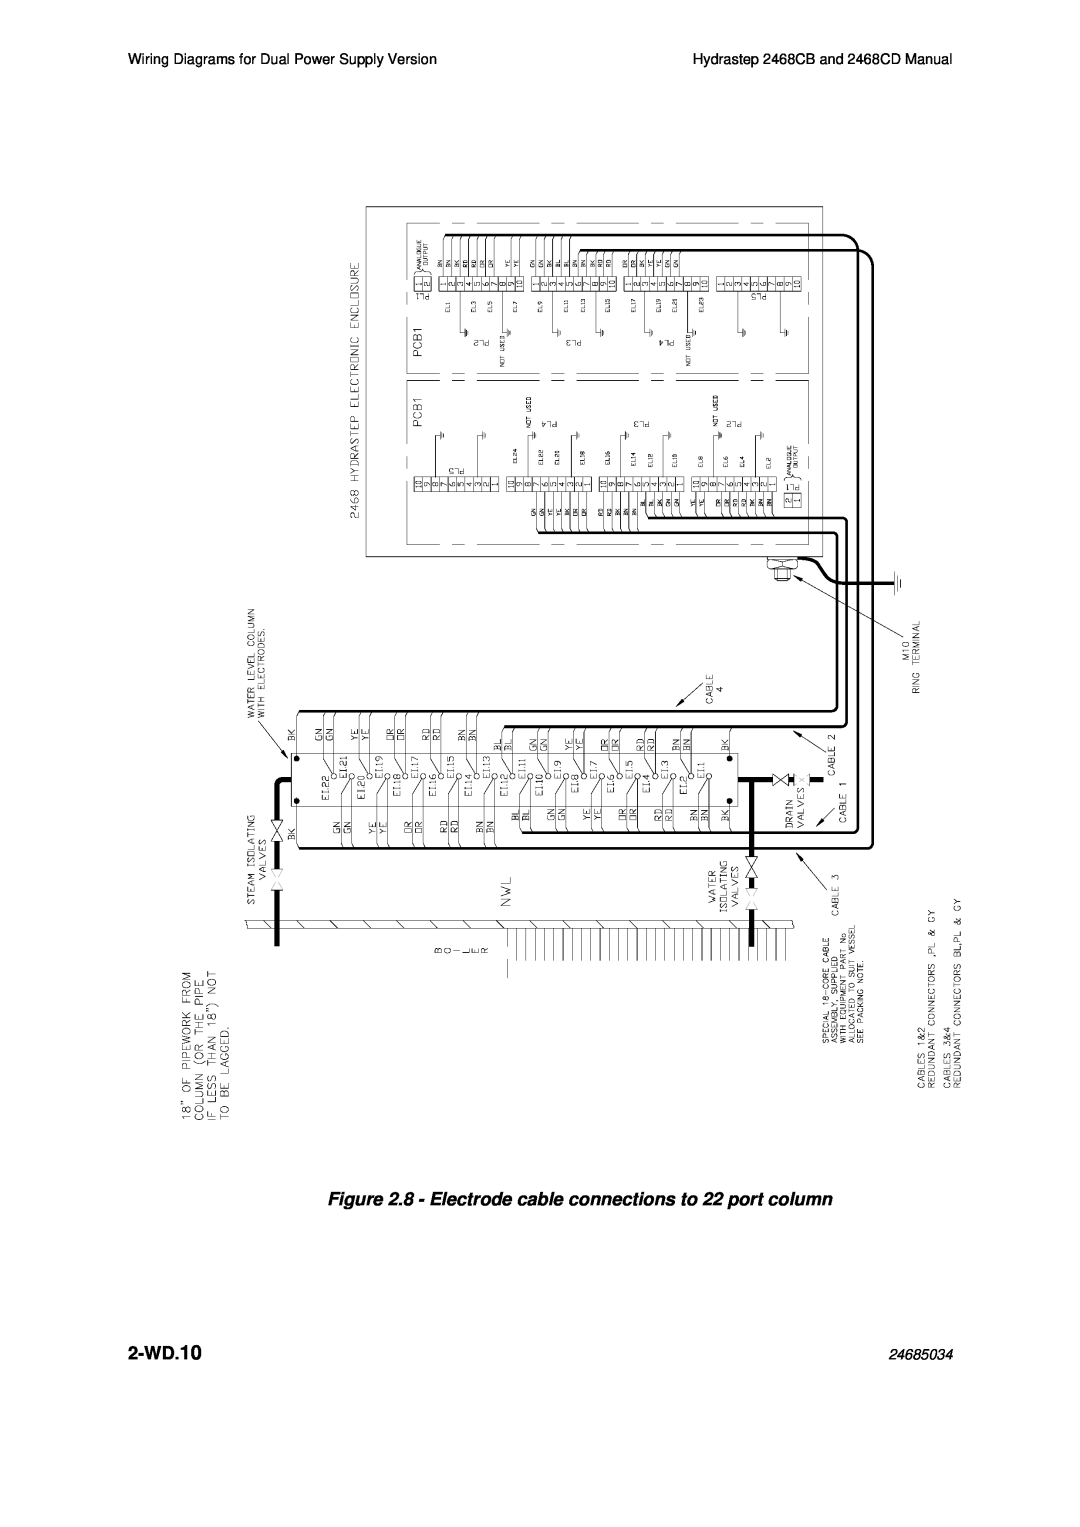 Emerson manual 2-WD.10, 24685034, Hydrastep 2468CB and 2468CD Manual 